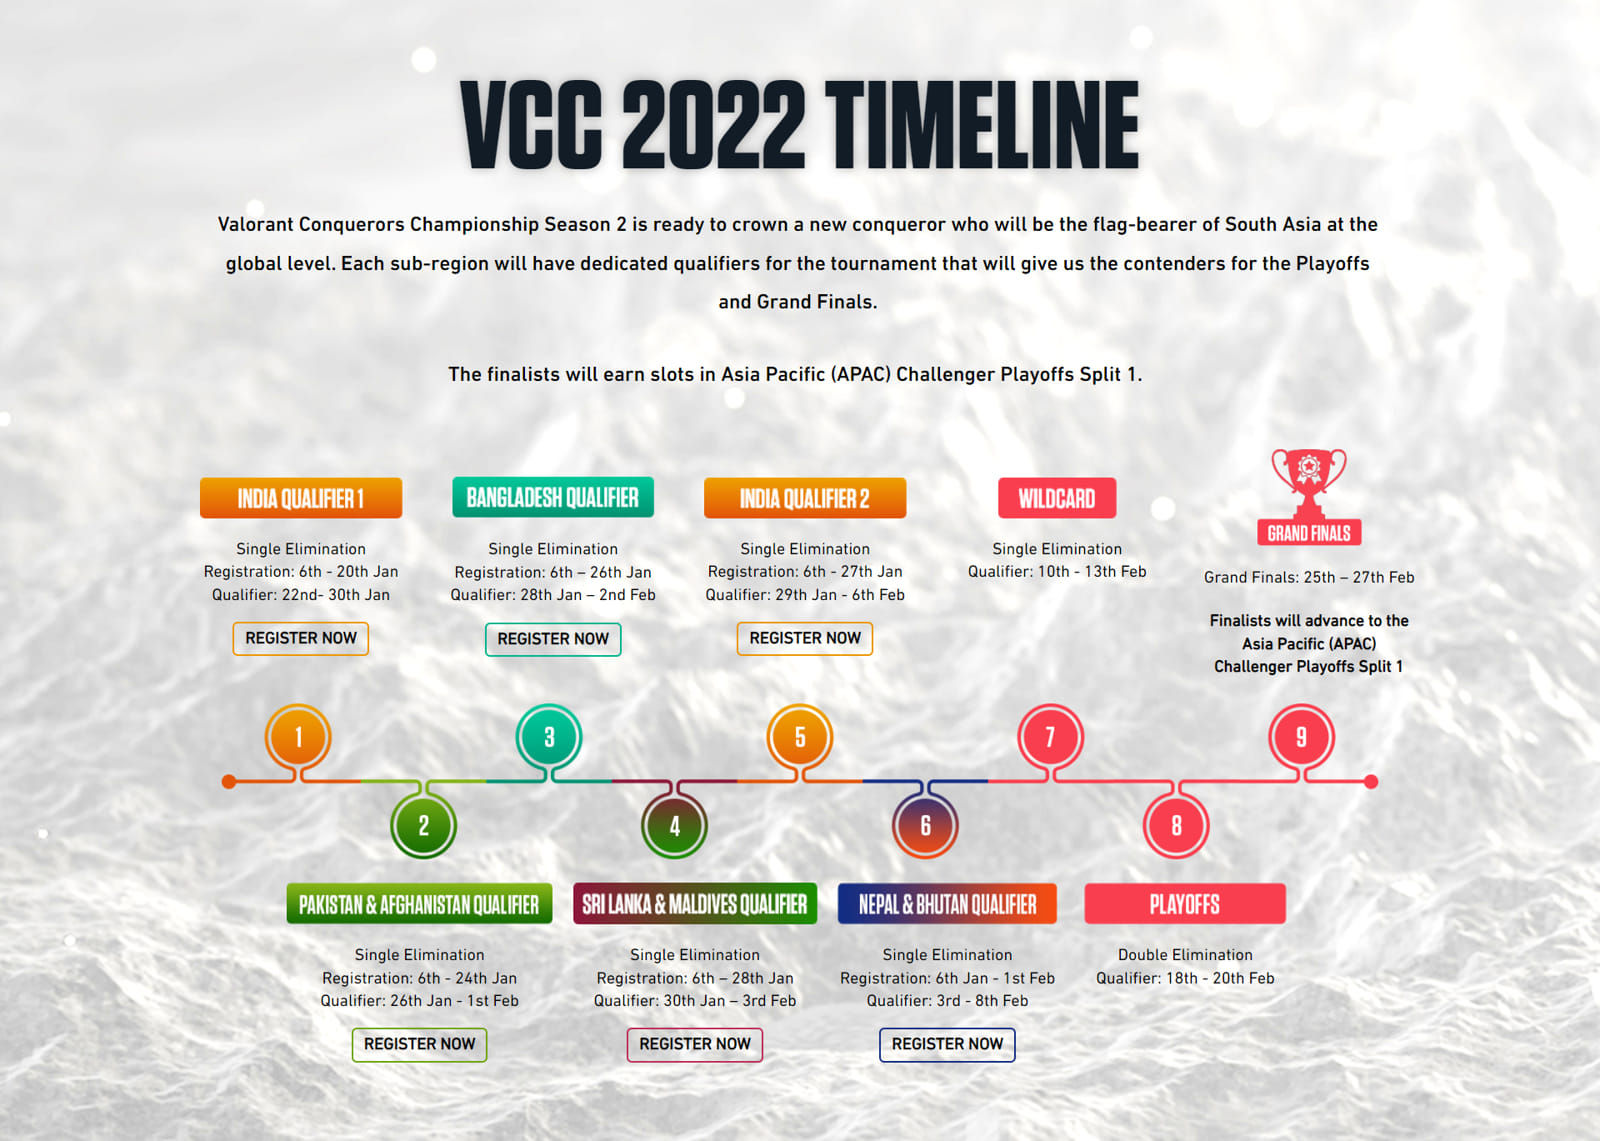 Valorant Conquerors Championship 2022 Timeline